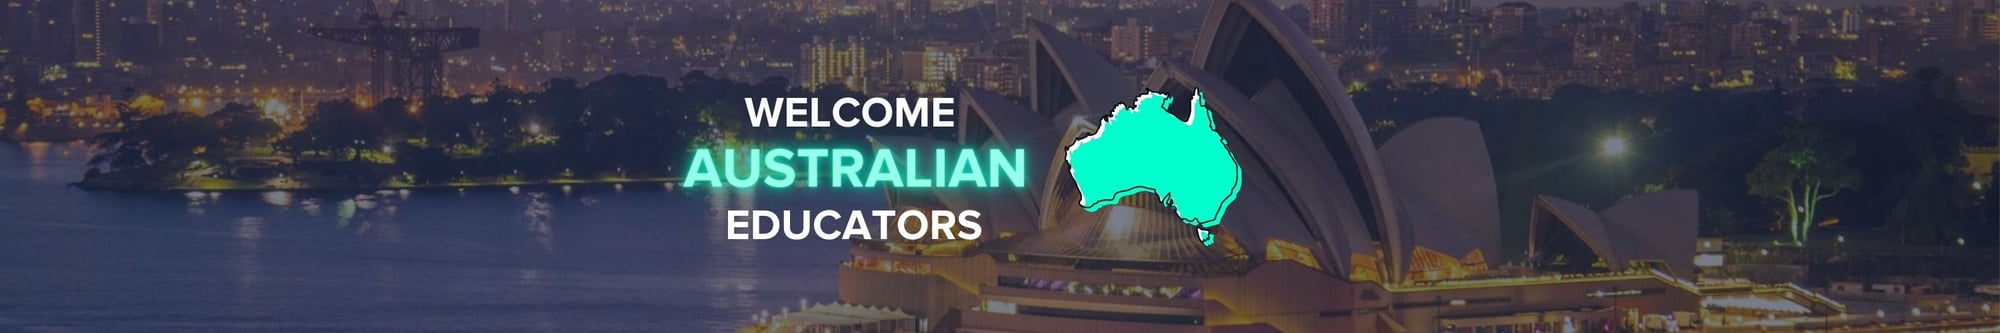 Welcome Australian educators 